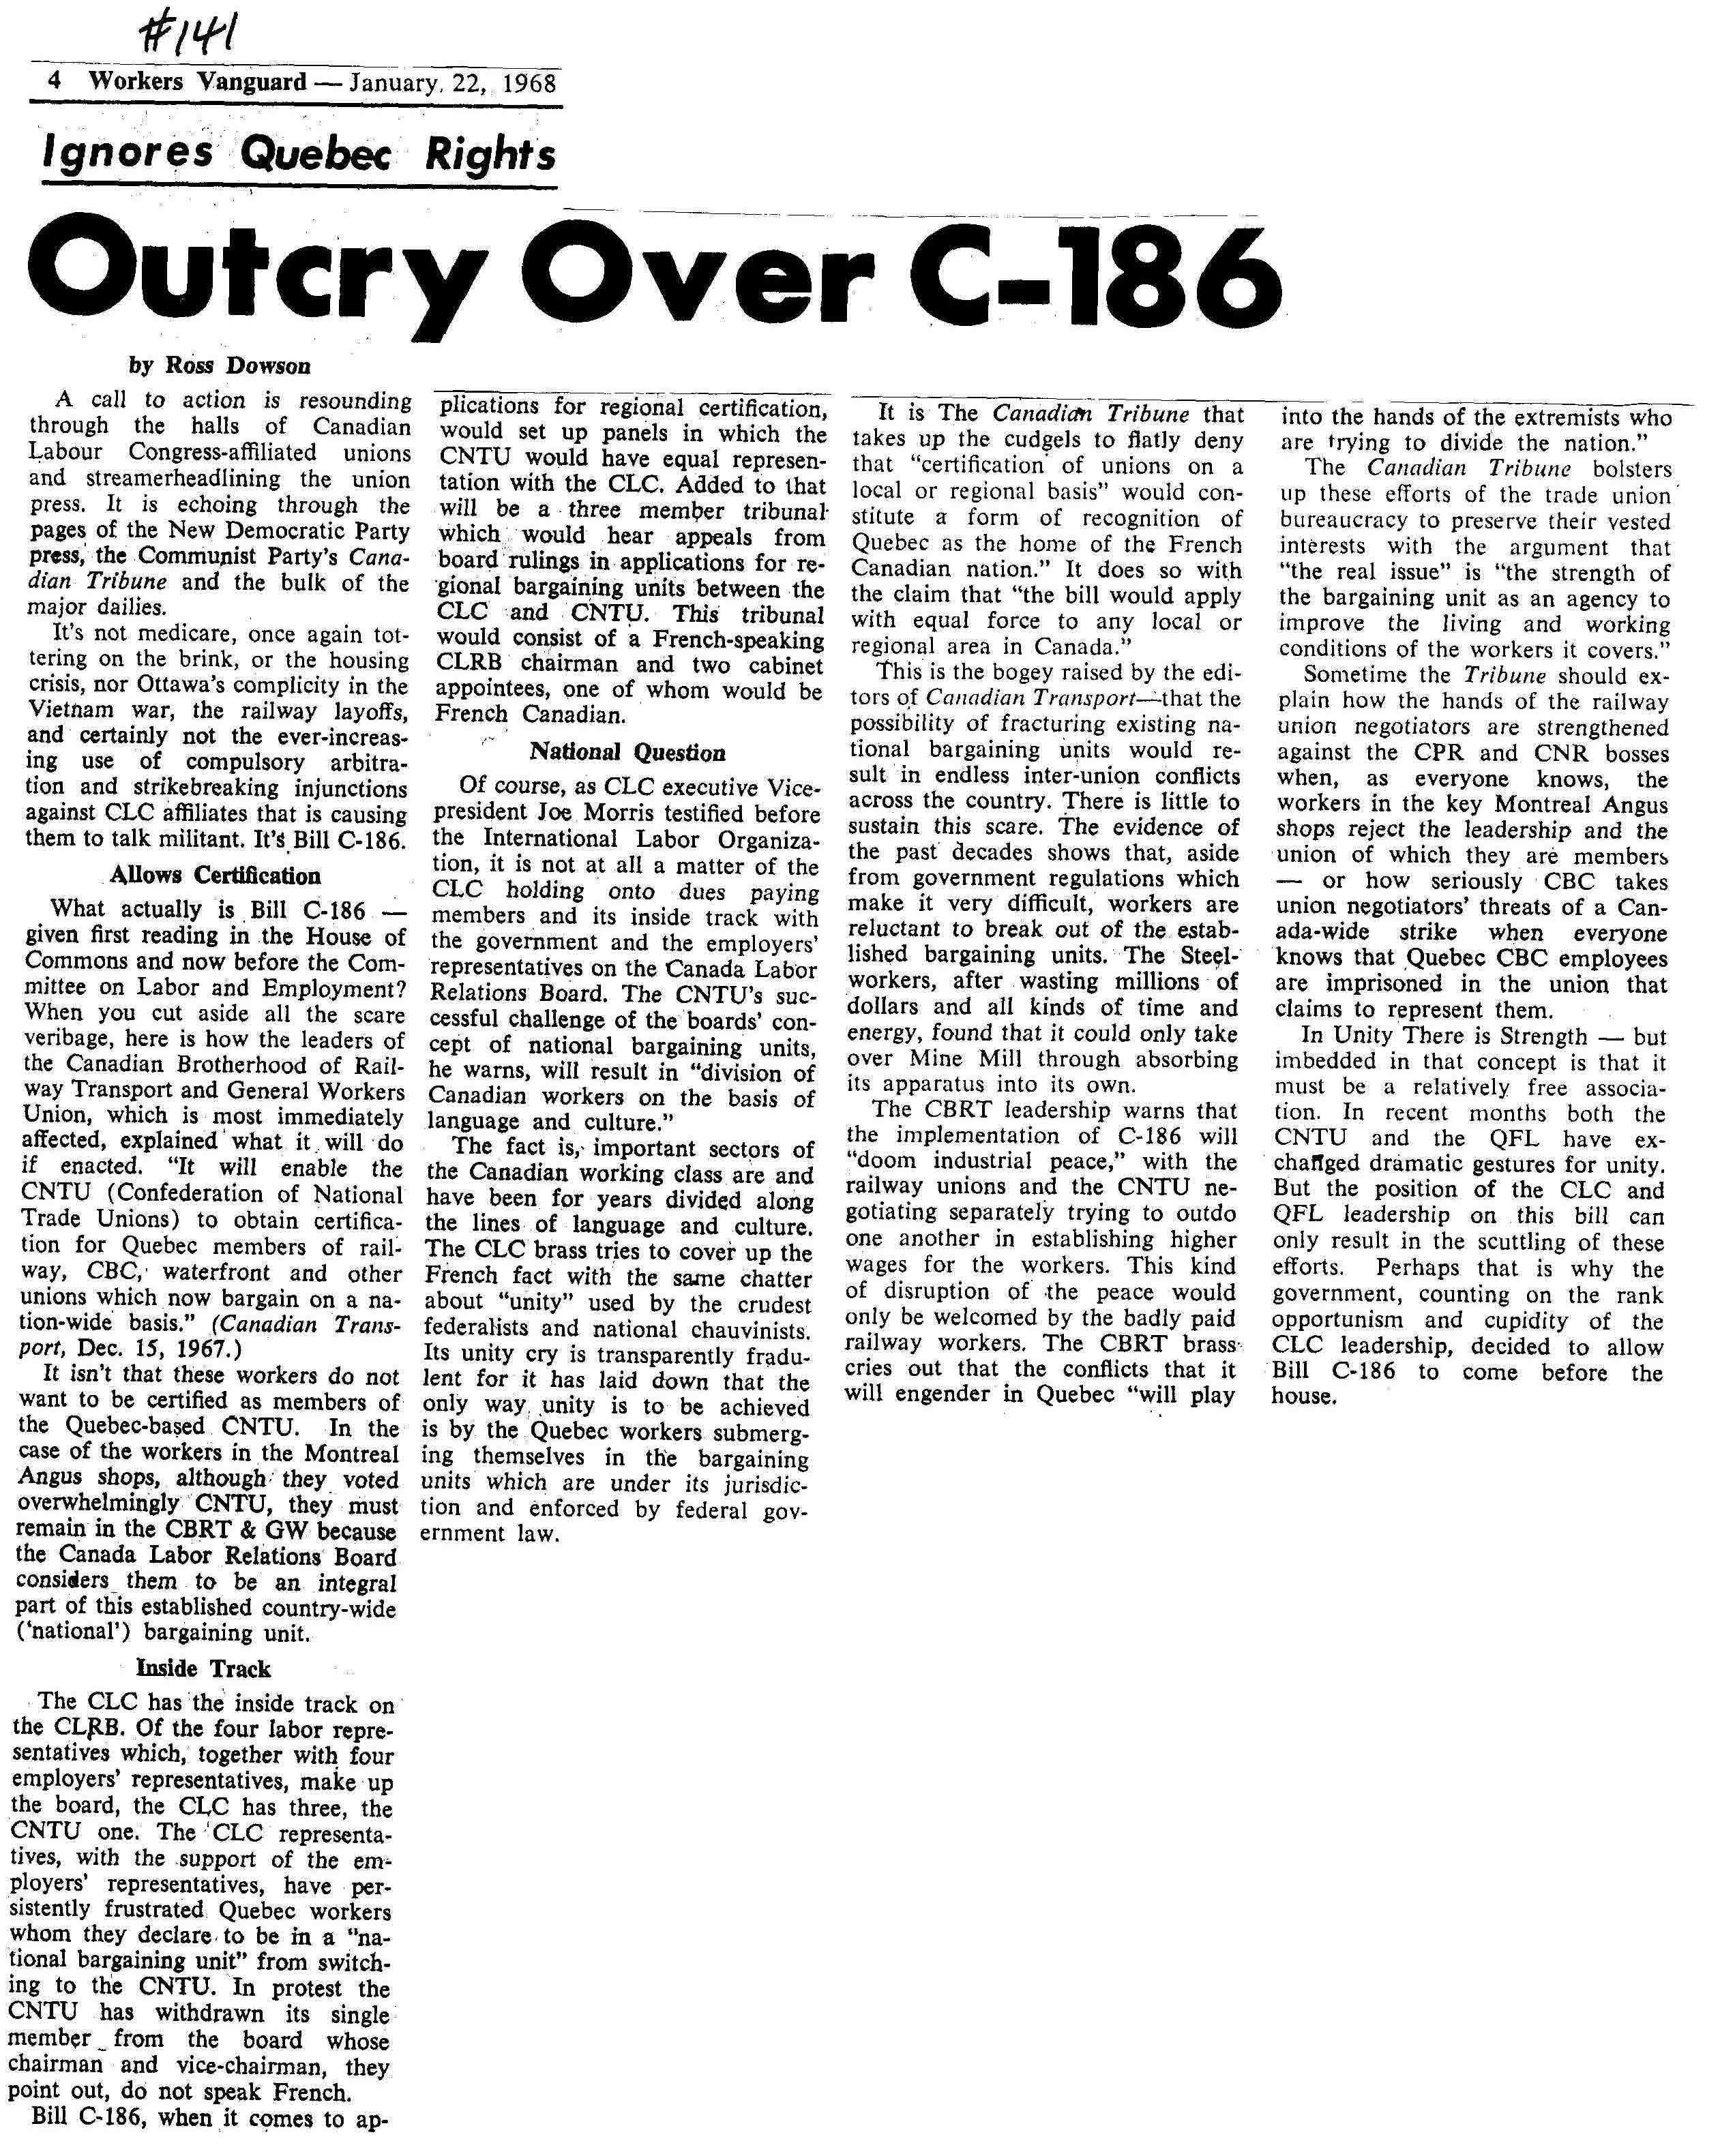 January 22nd, 1968 WV#141